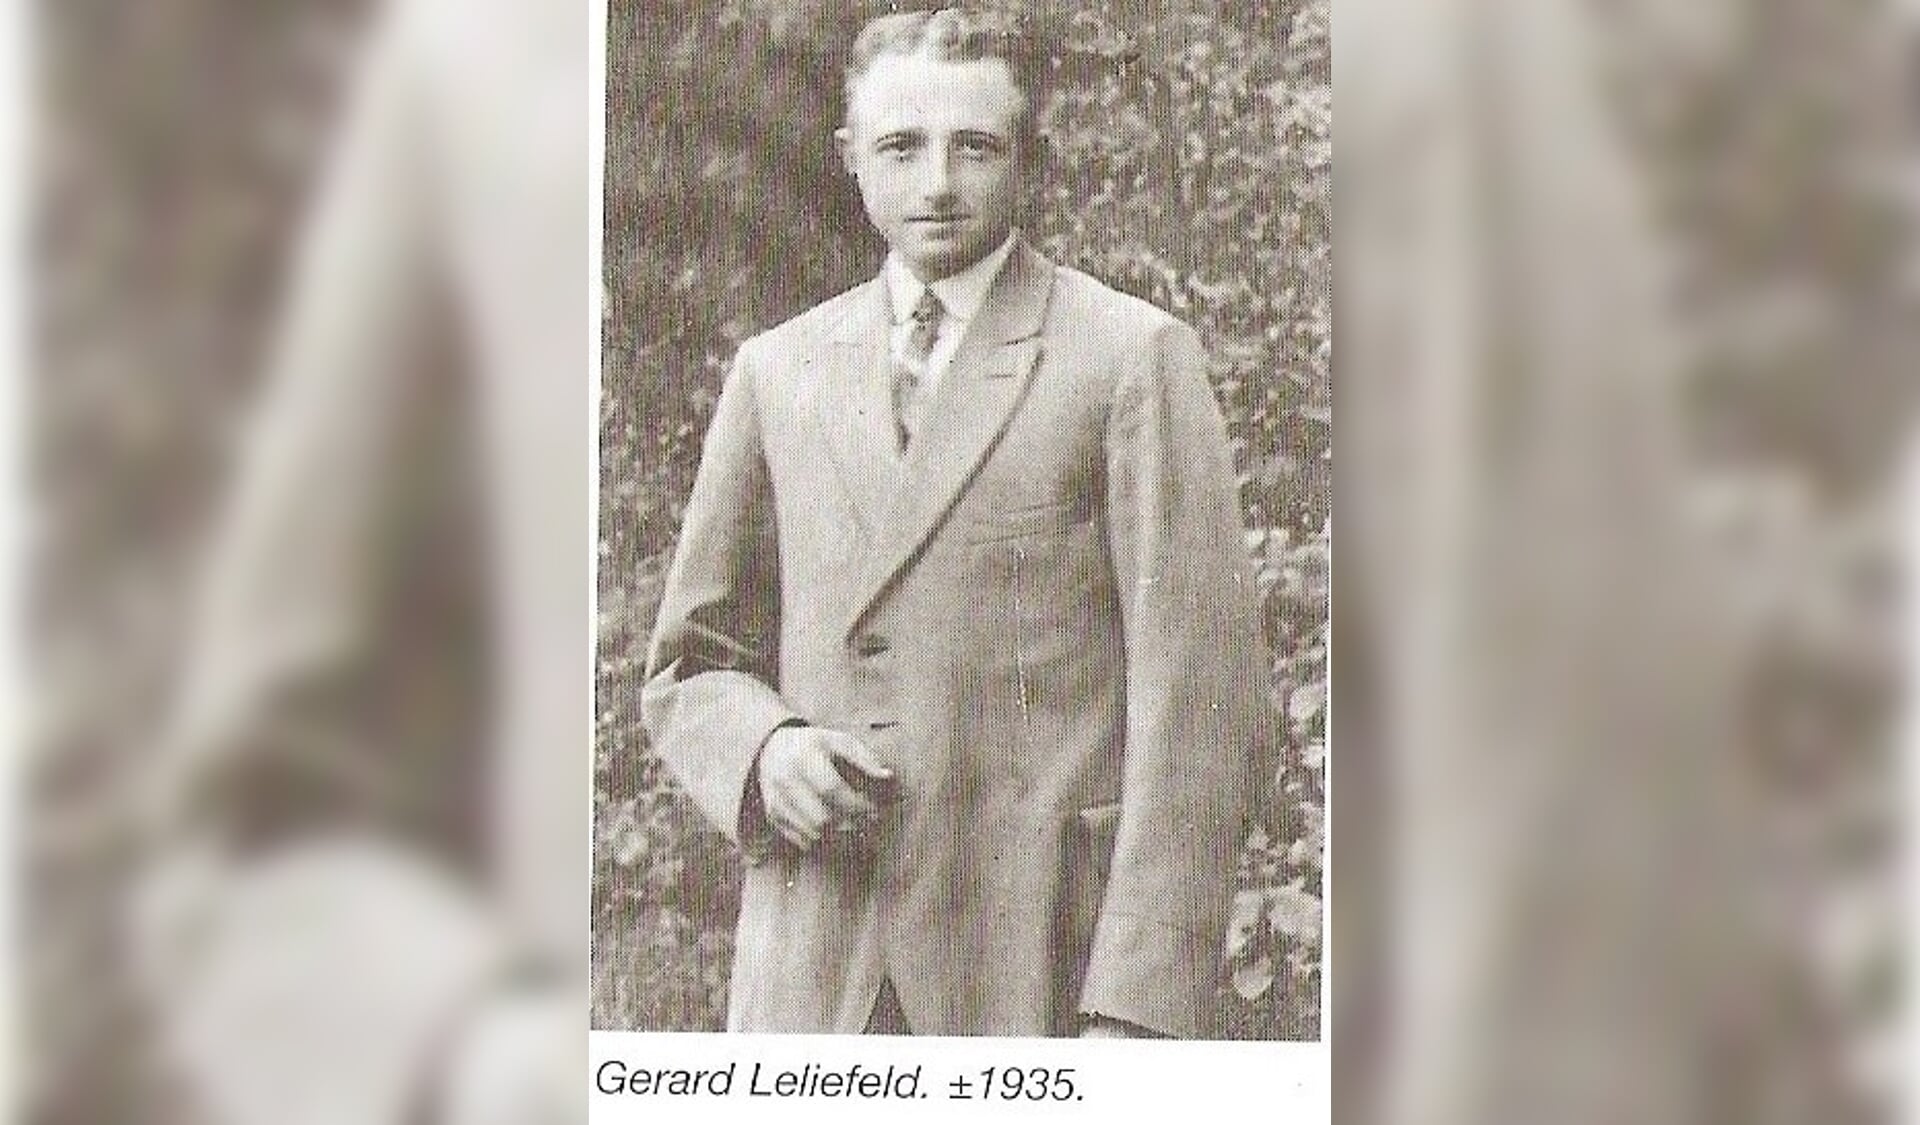 Gerard Leliefeld in 1935